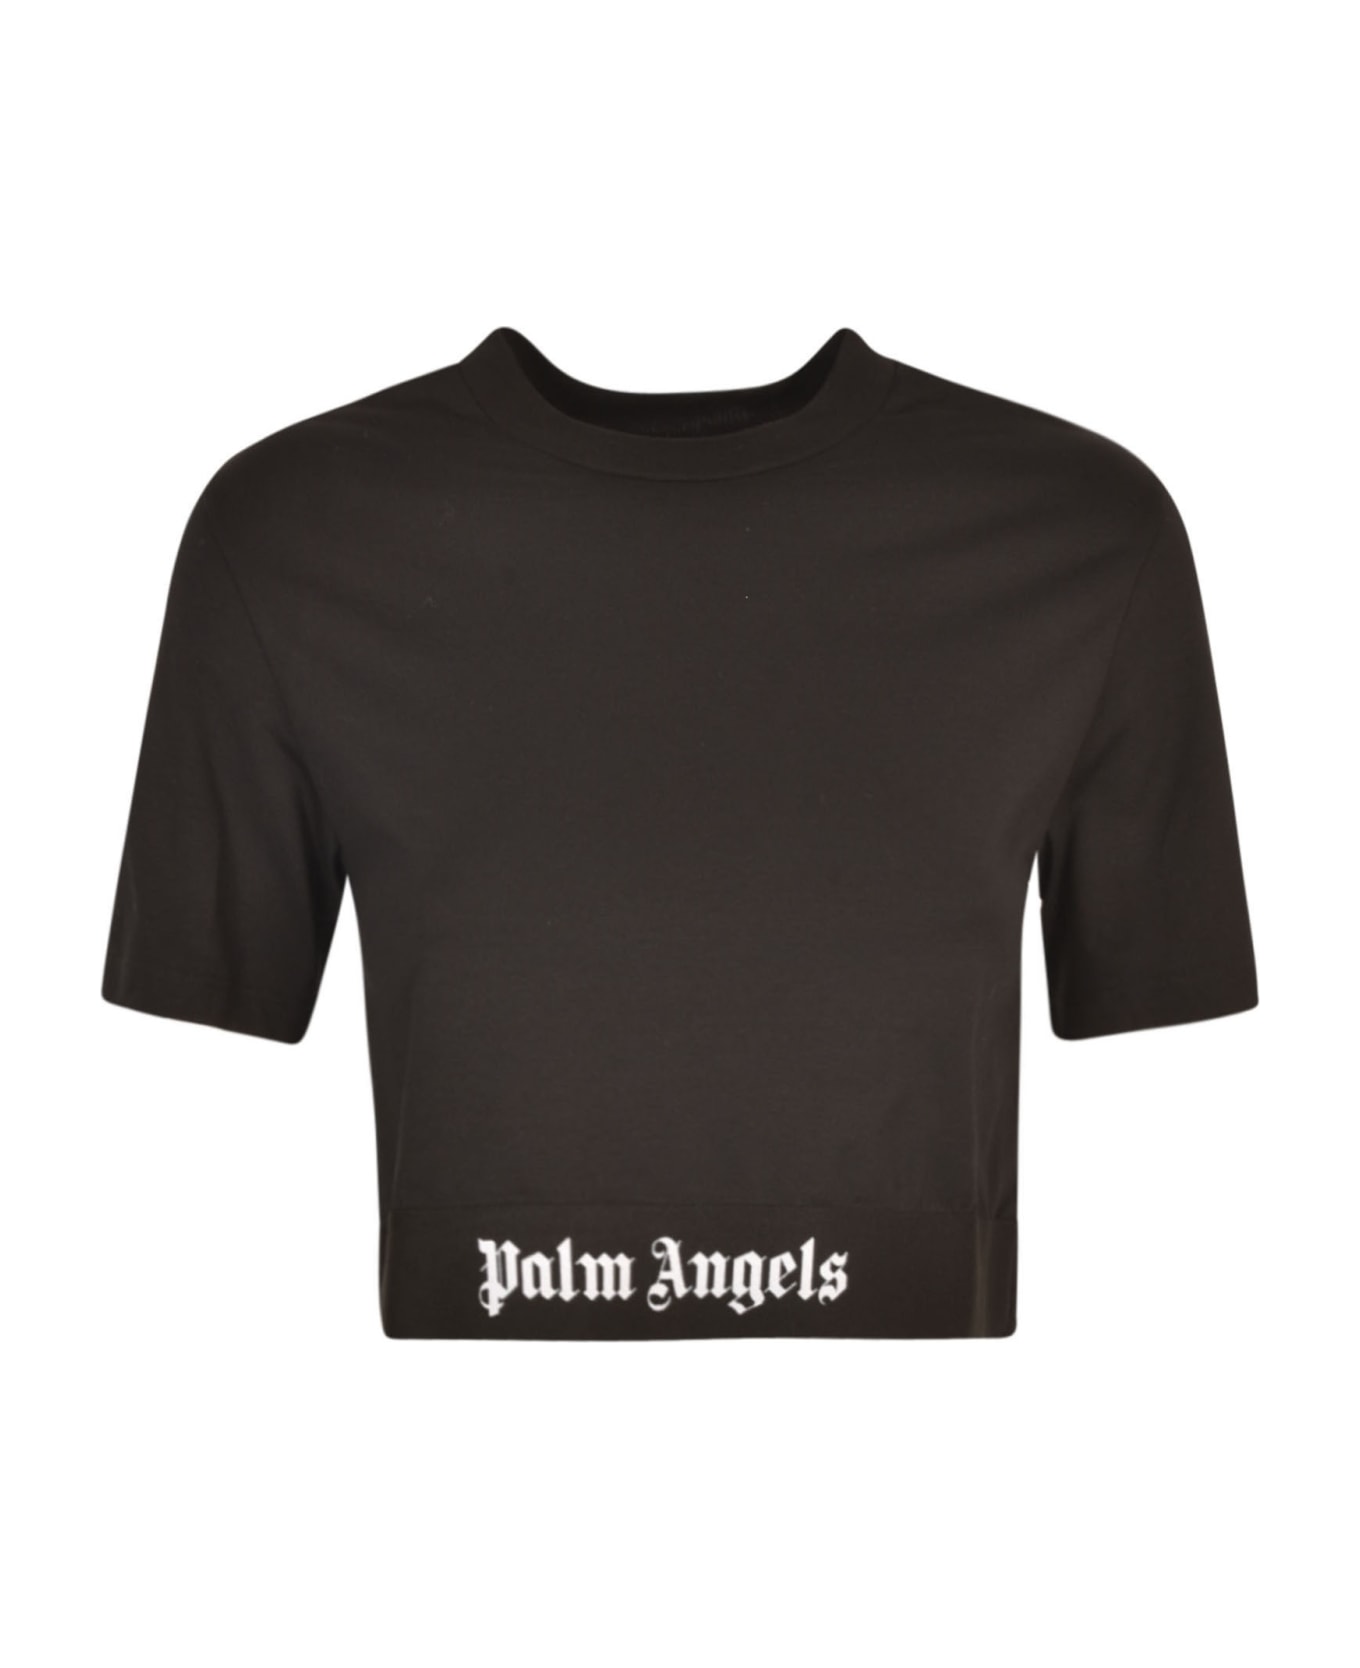 Palm Angels Logo Waistband Cropped T-shirt - Black/White